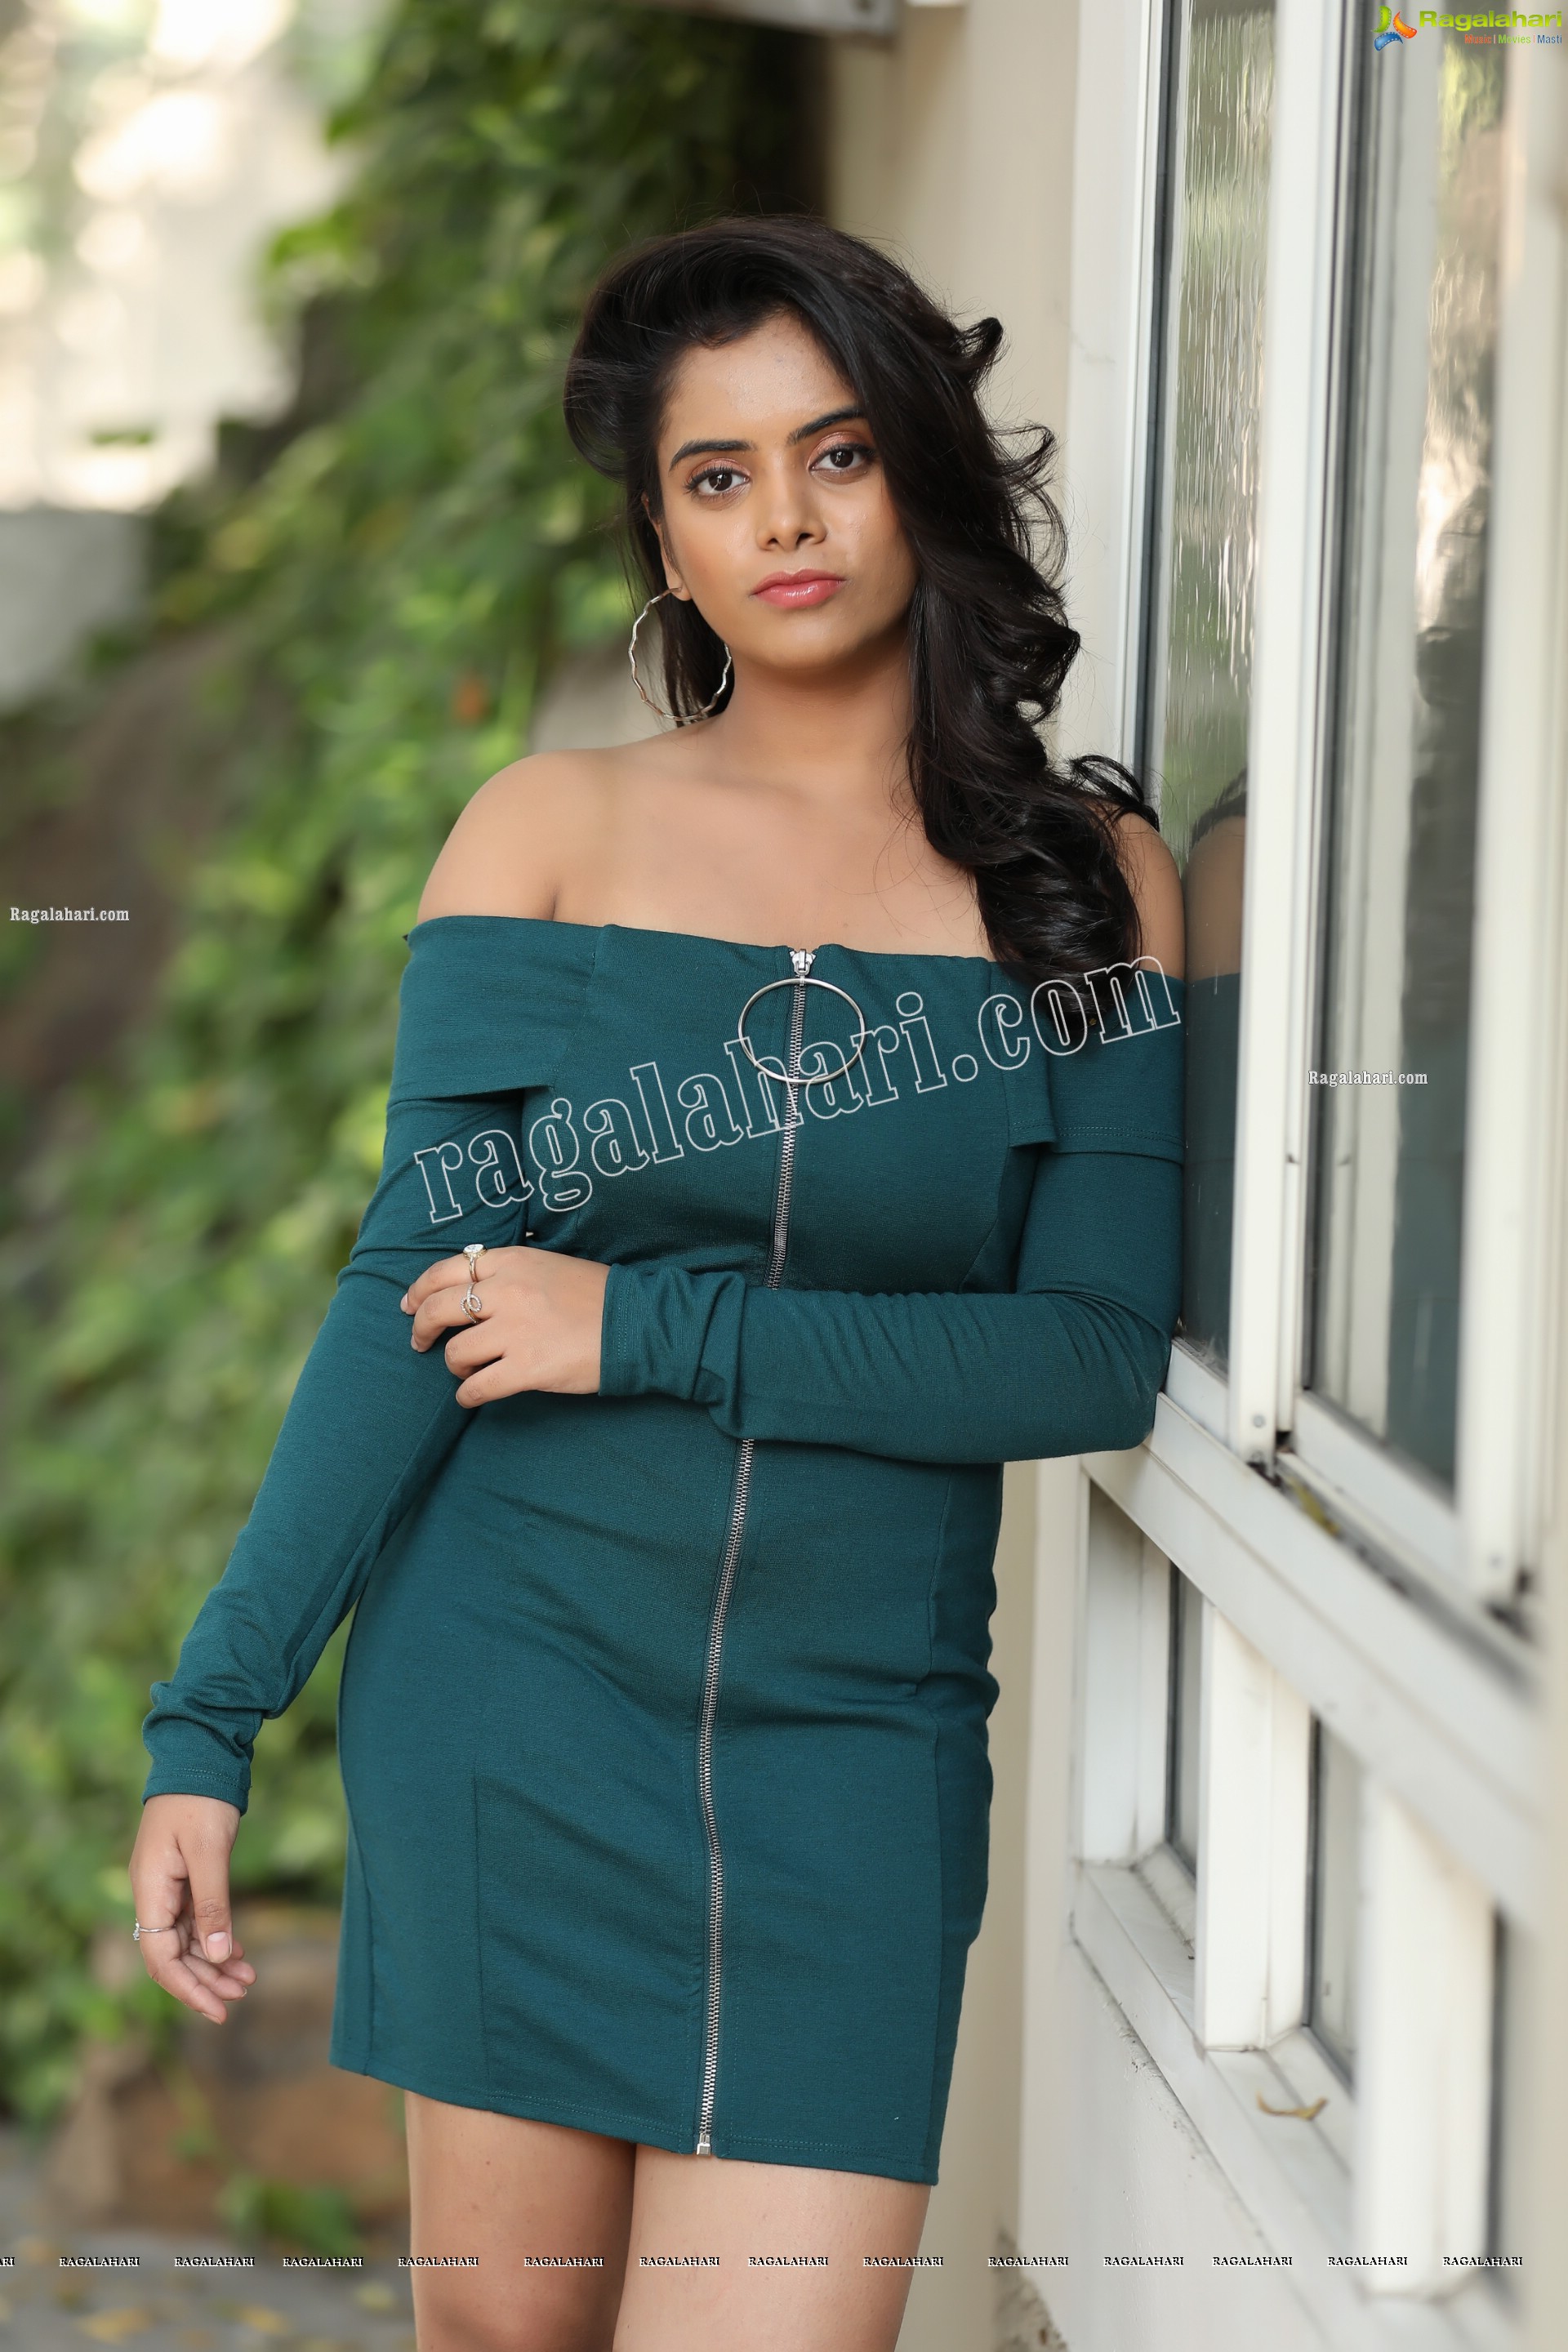 Sameera Reddy G in Teal Blue Off Shoulder Dress Exclusive Photo Shoot